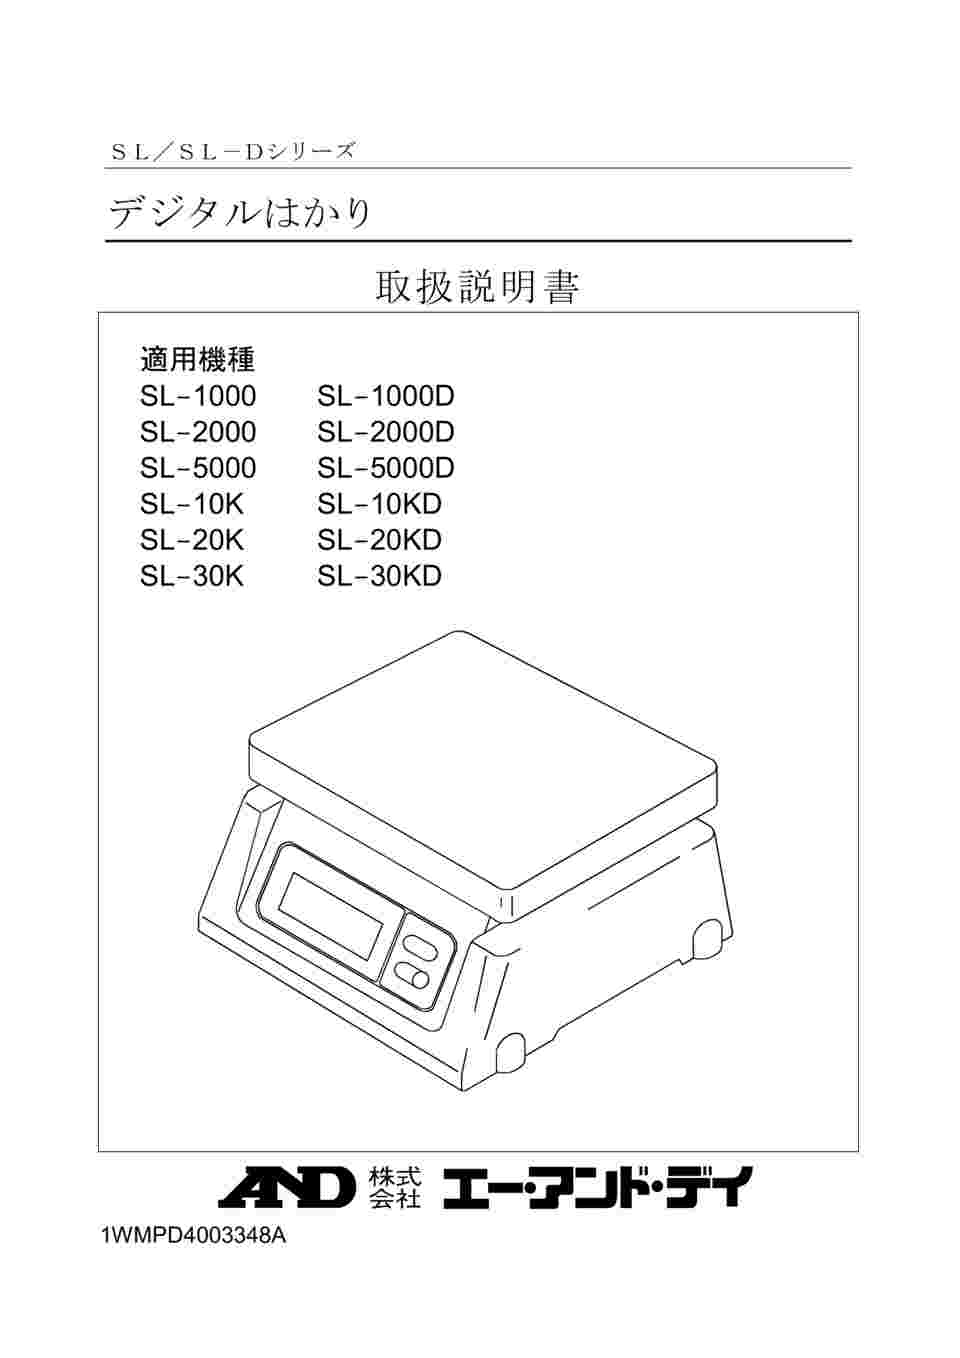 AD デジタル両面表示はかり SL-20KD ≪ひょう量:20kg 最小表示:0.01kg 皿寸法:230(W)*190(D)mm 検定無≫ - 2